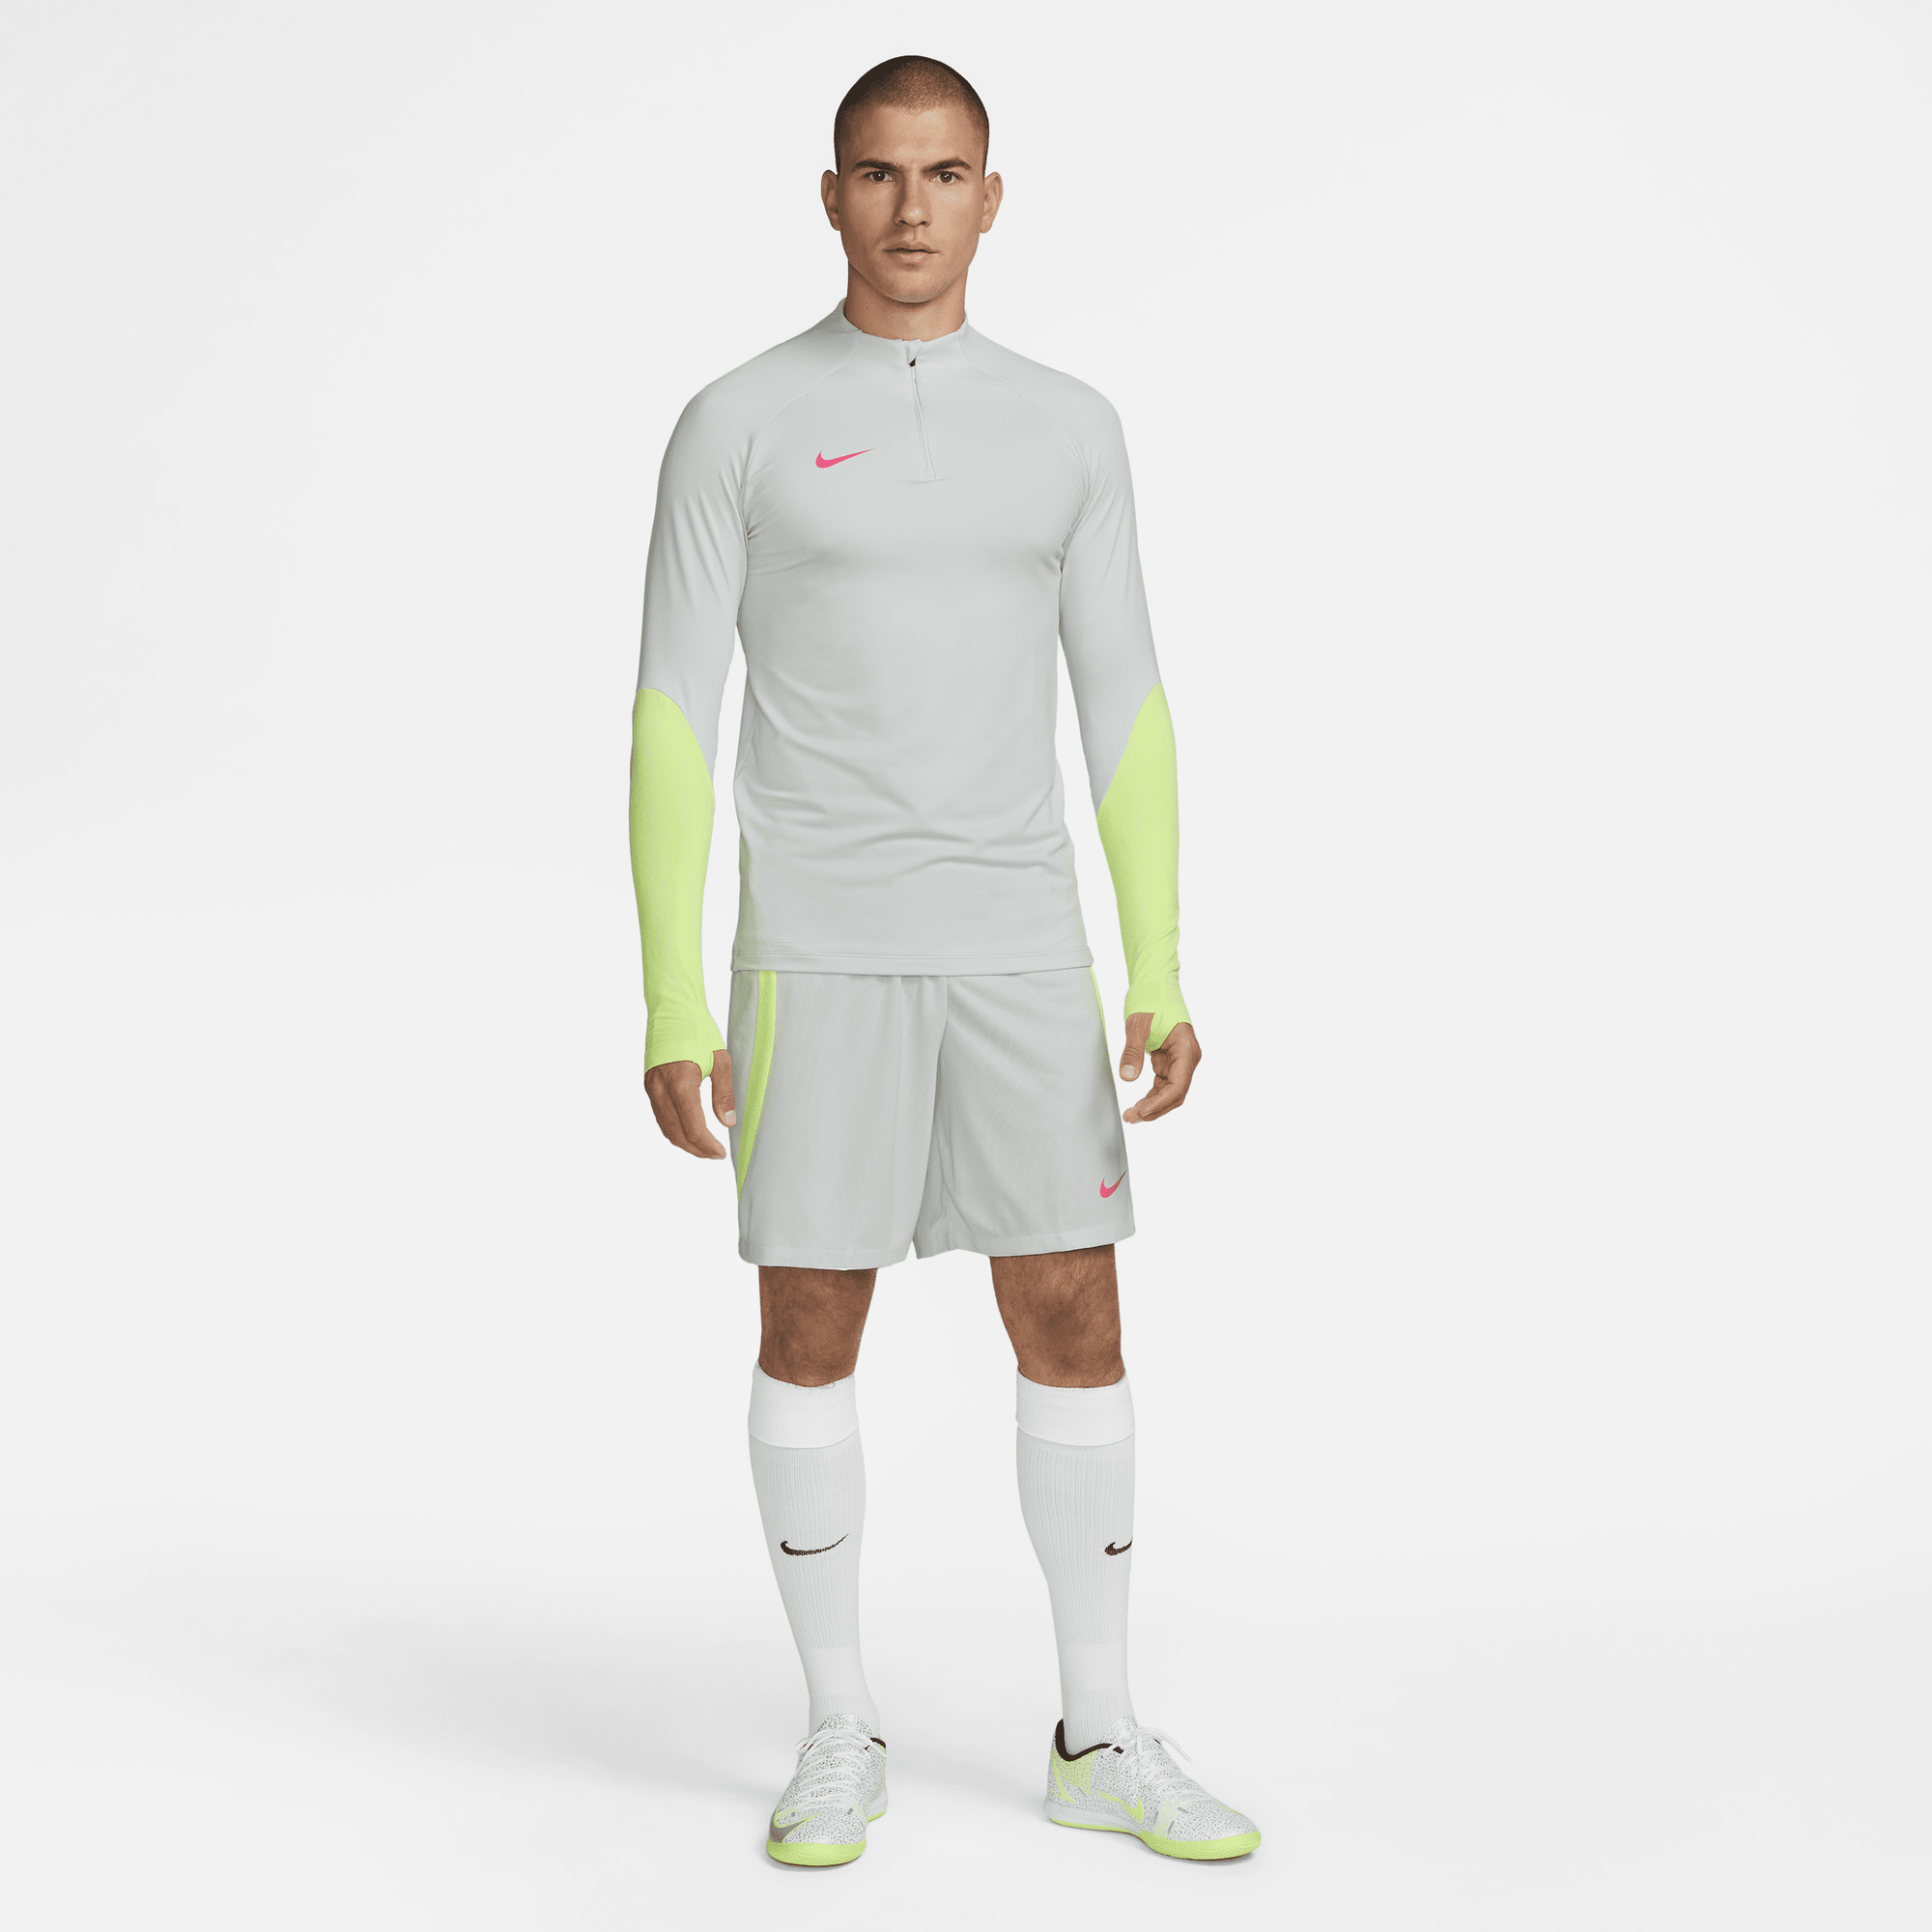 Nike Strike Football Leg Sleeves - Blue price from nike in Saudi